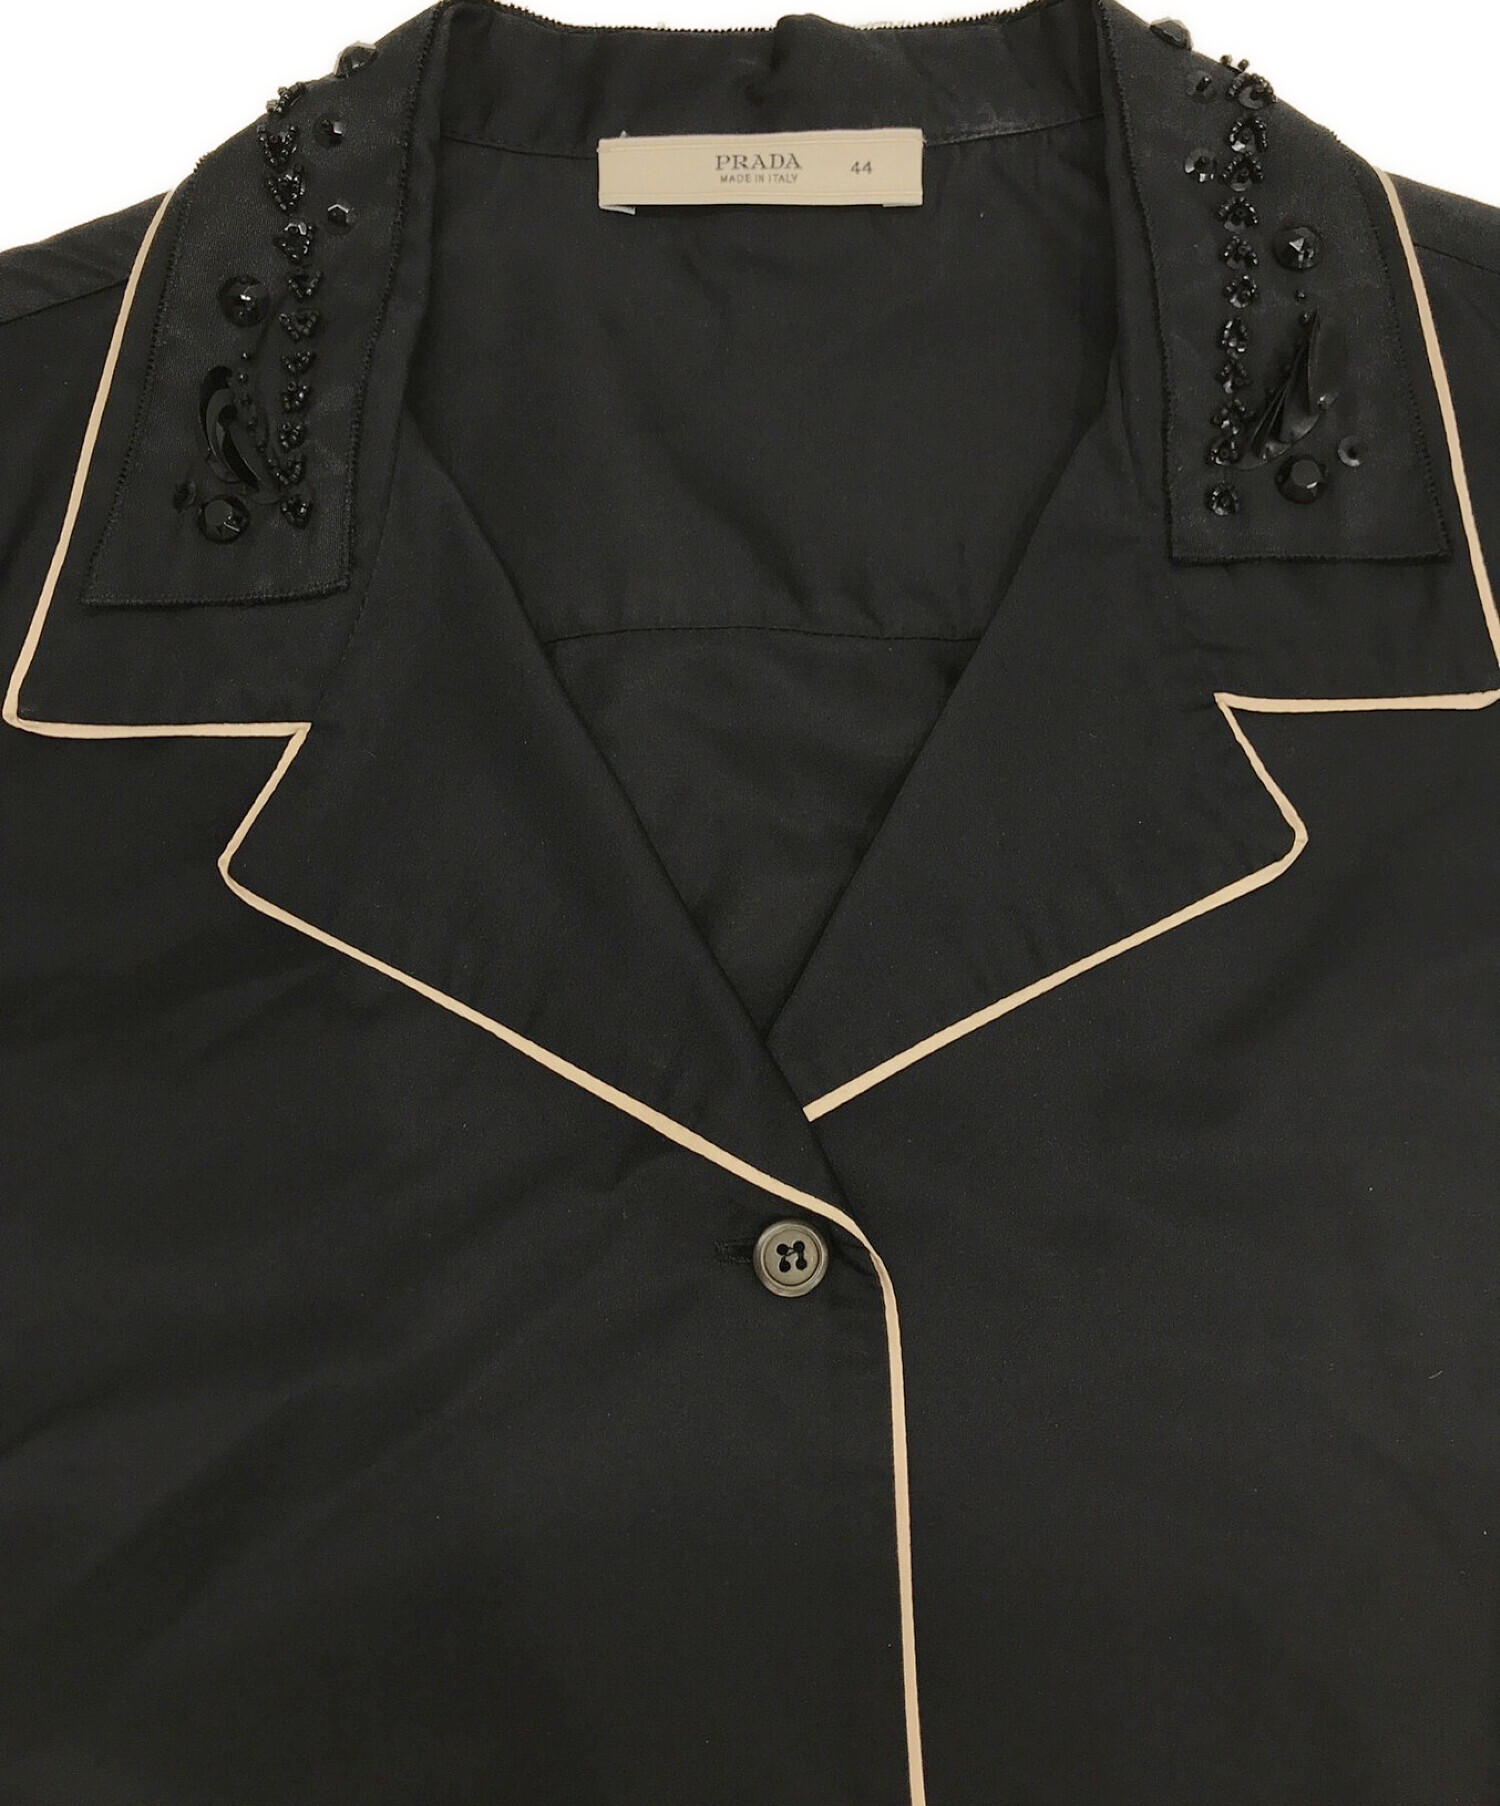 PRADA (プラダ) ビジューカラーサテンパイピングシャツ/シルクシャツ/パジャマシャツ ブラック サイズ:44